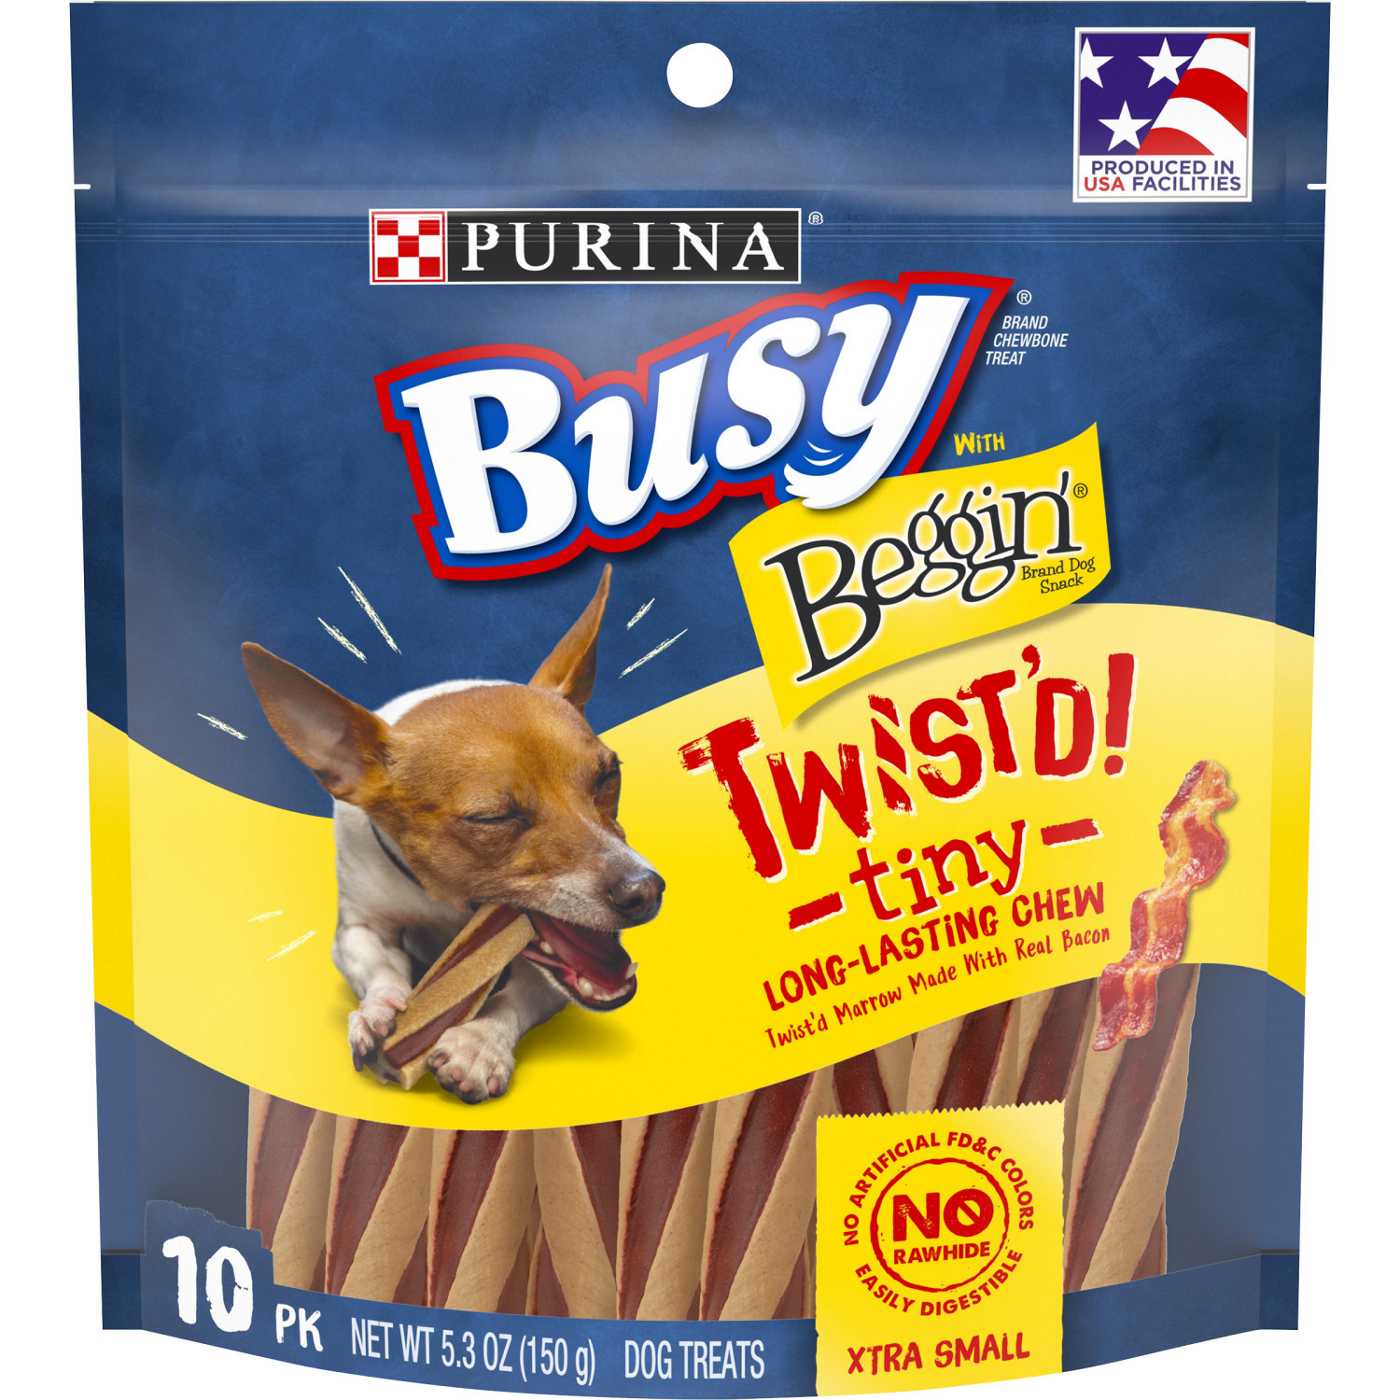 Busy Beggin' Twist'd Tiny Chew Dog Treats; image 1 of 9